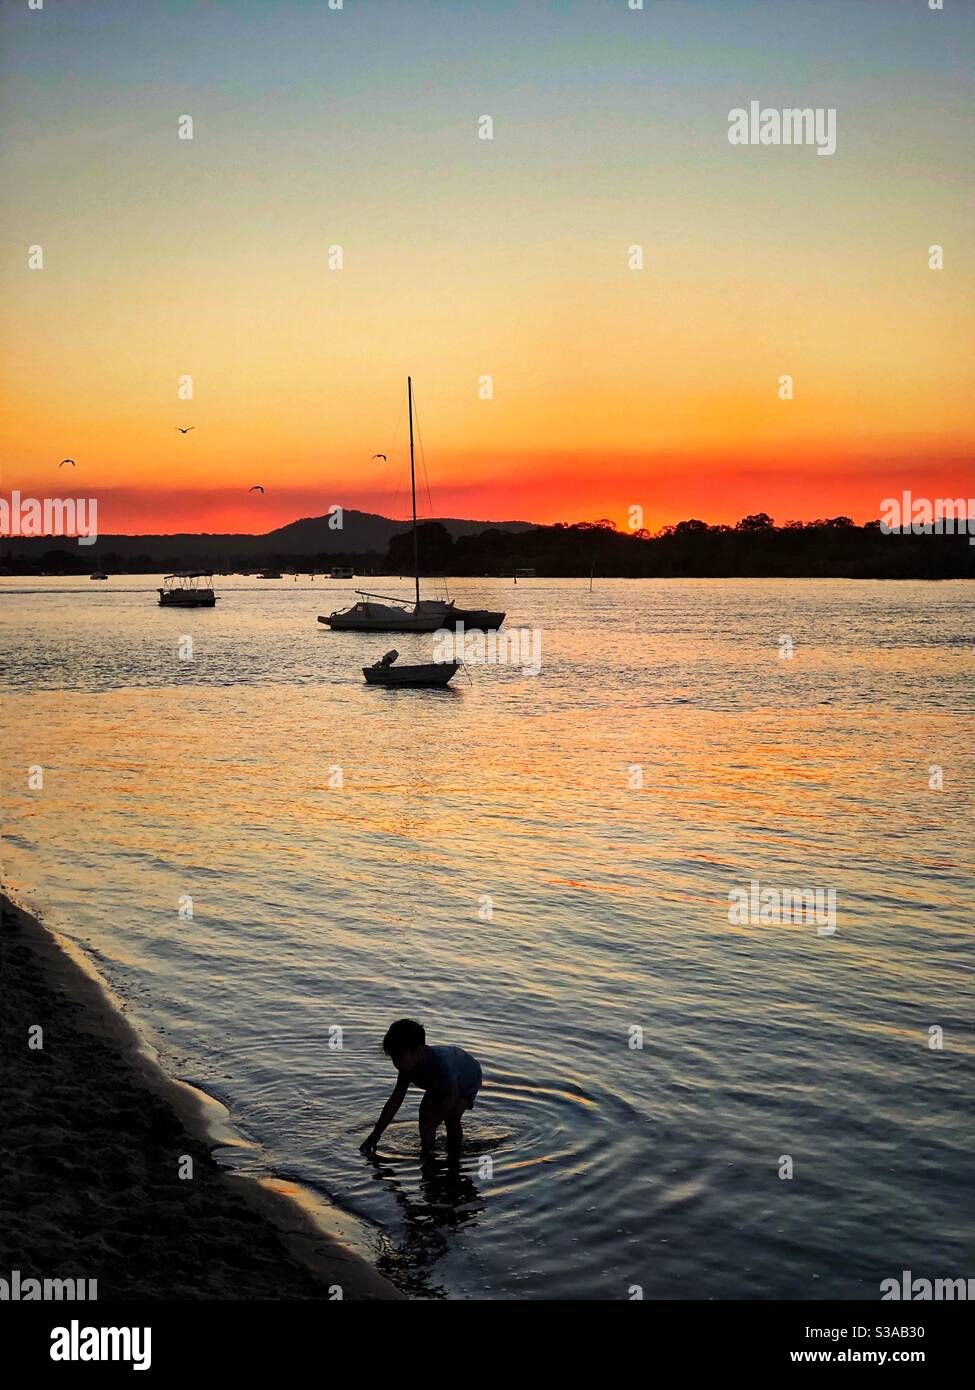 Kind Silhouette am Strand Noosa River Queensland Australien Stockfoto